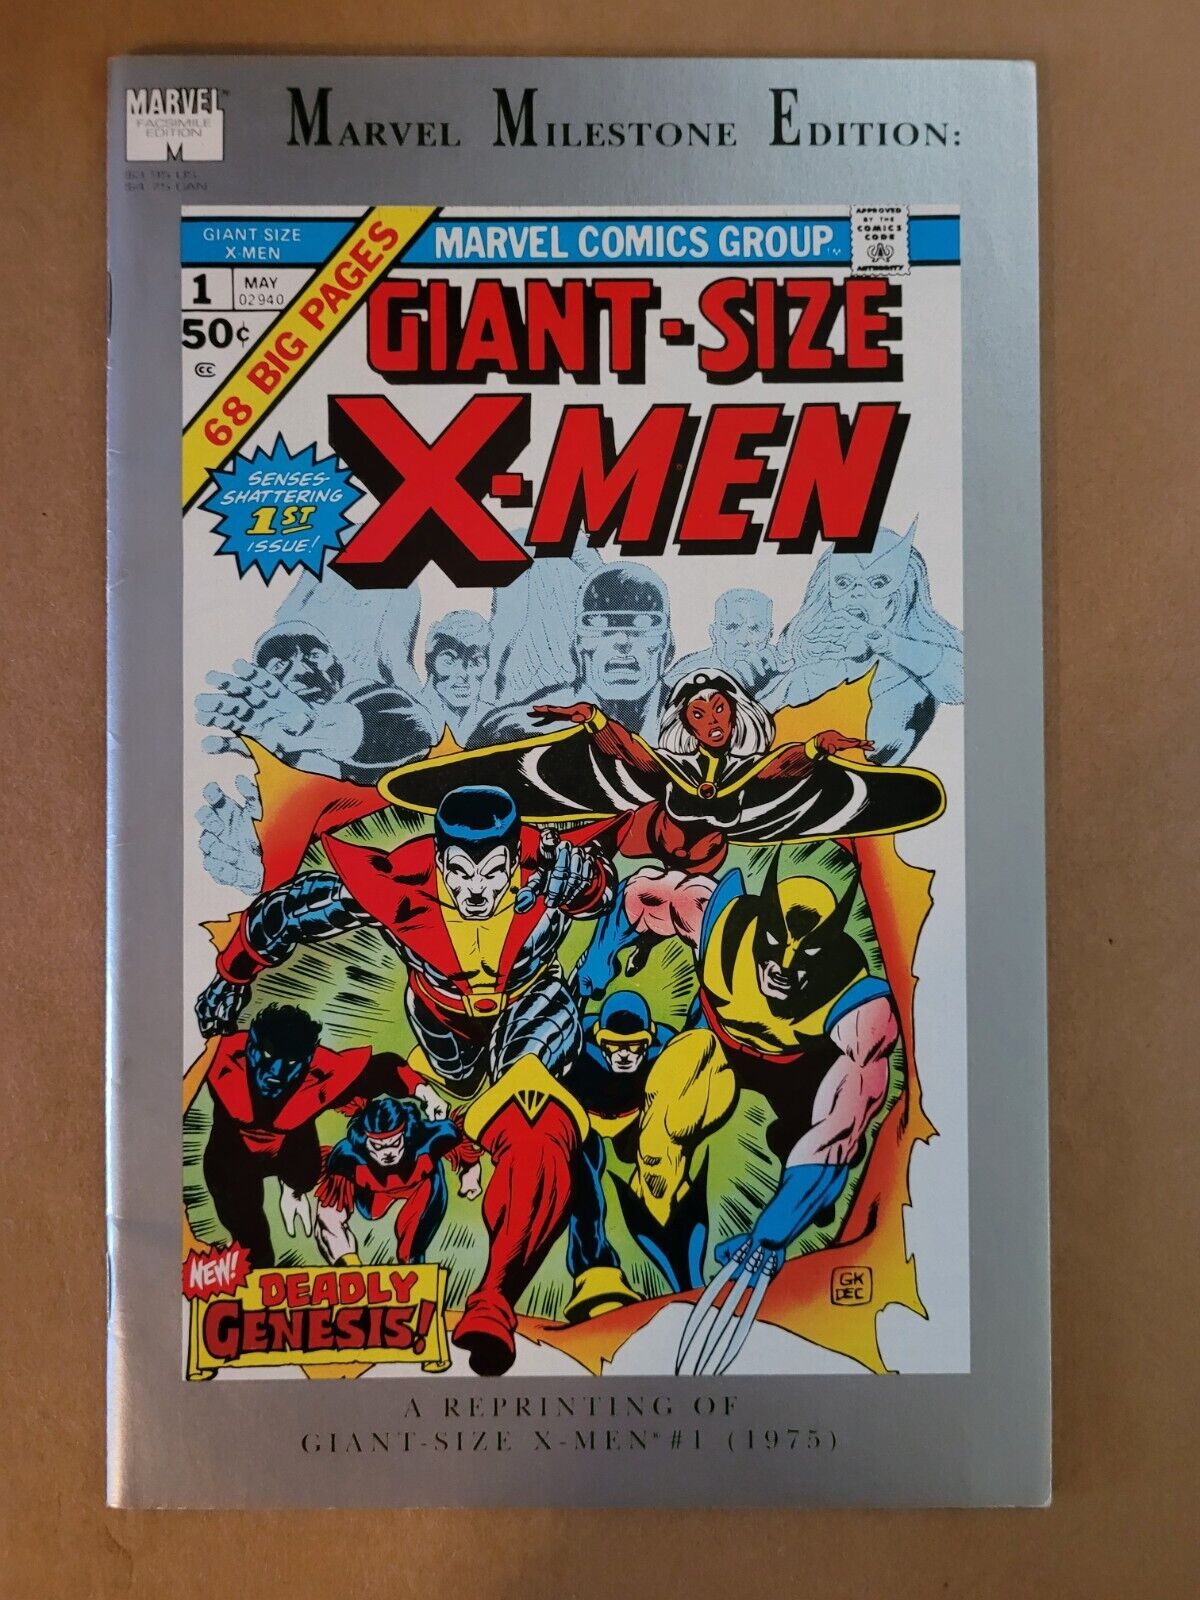 Marvel Milestone Edition: Giant-Size X-Men #1 Fine/Very Fine